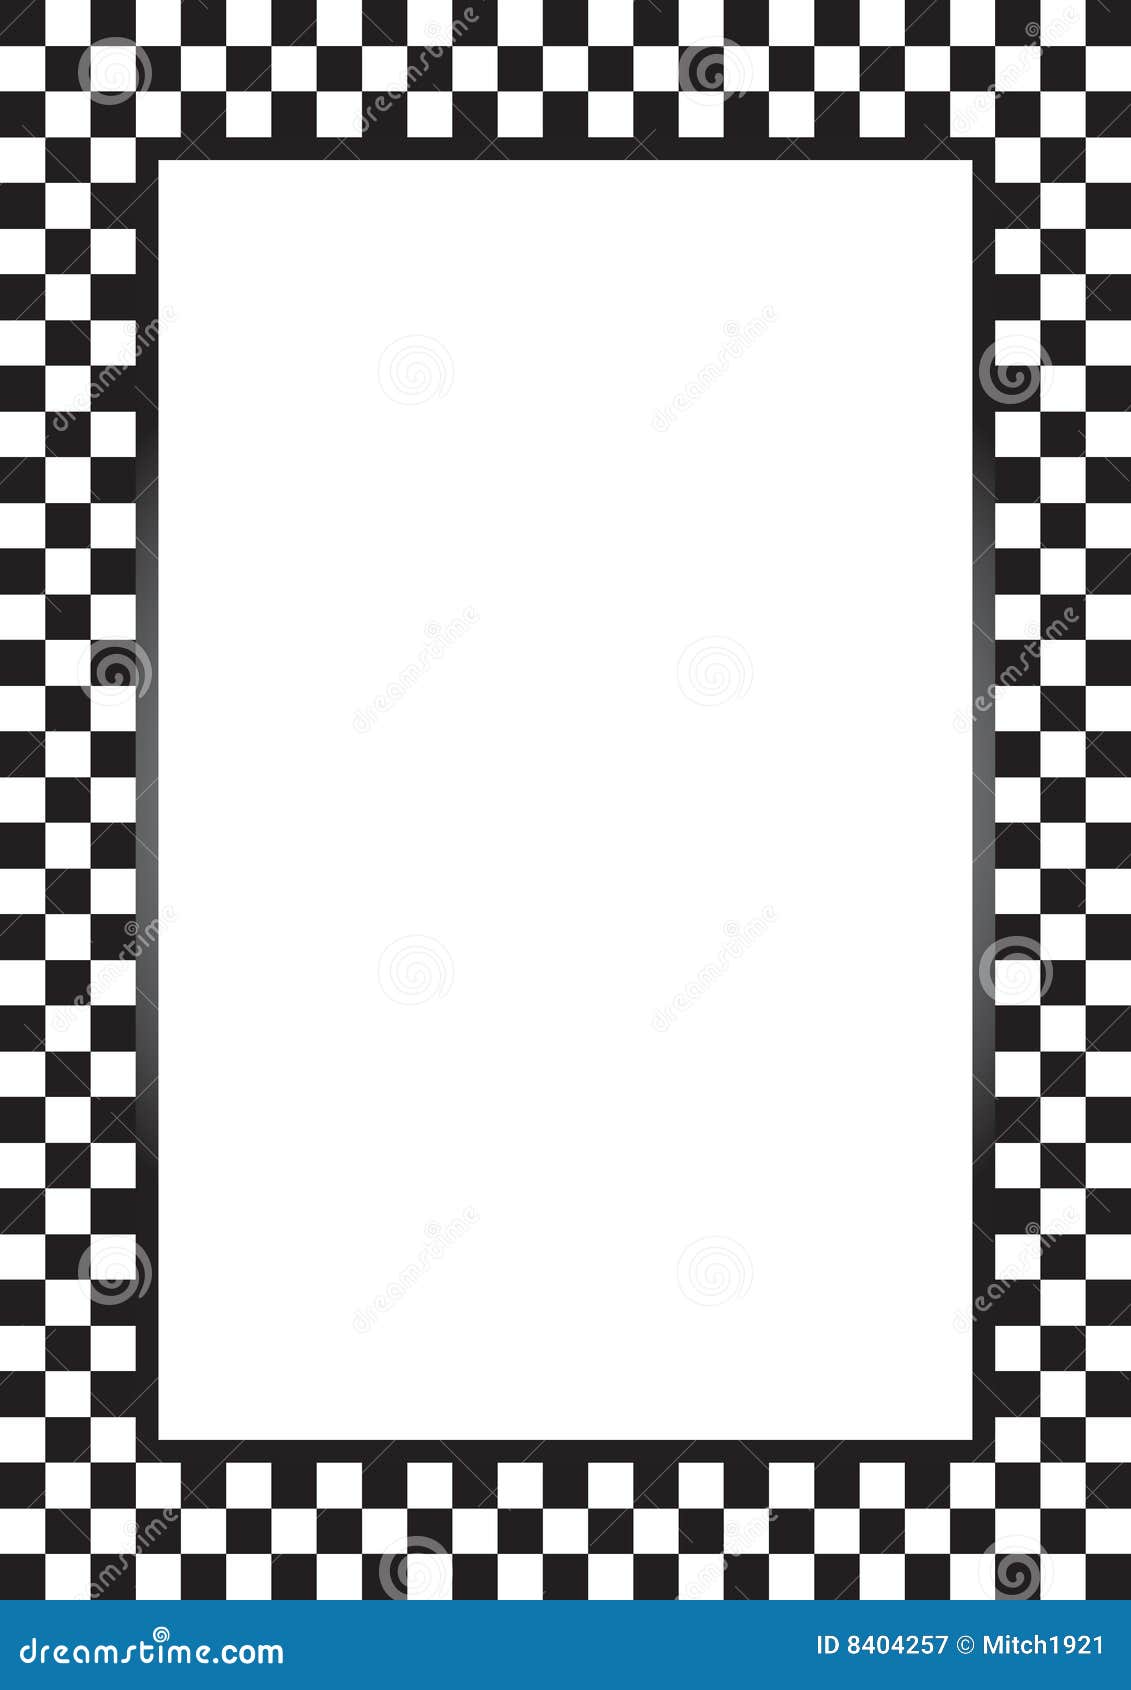 clip art checkered flag border - photo #50